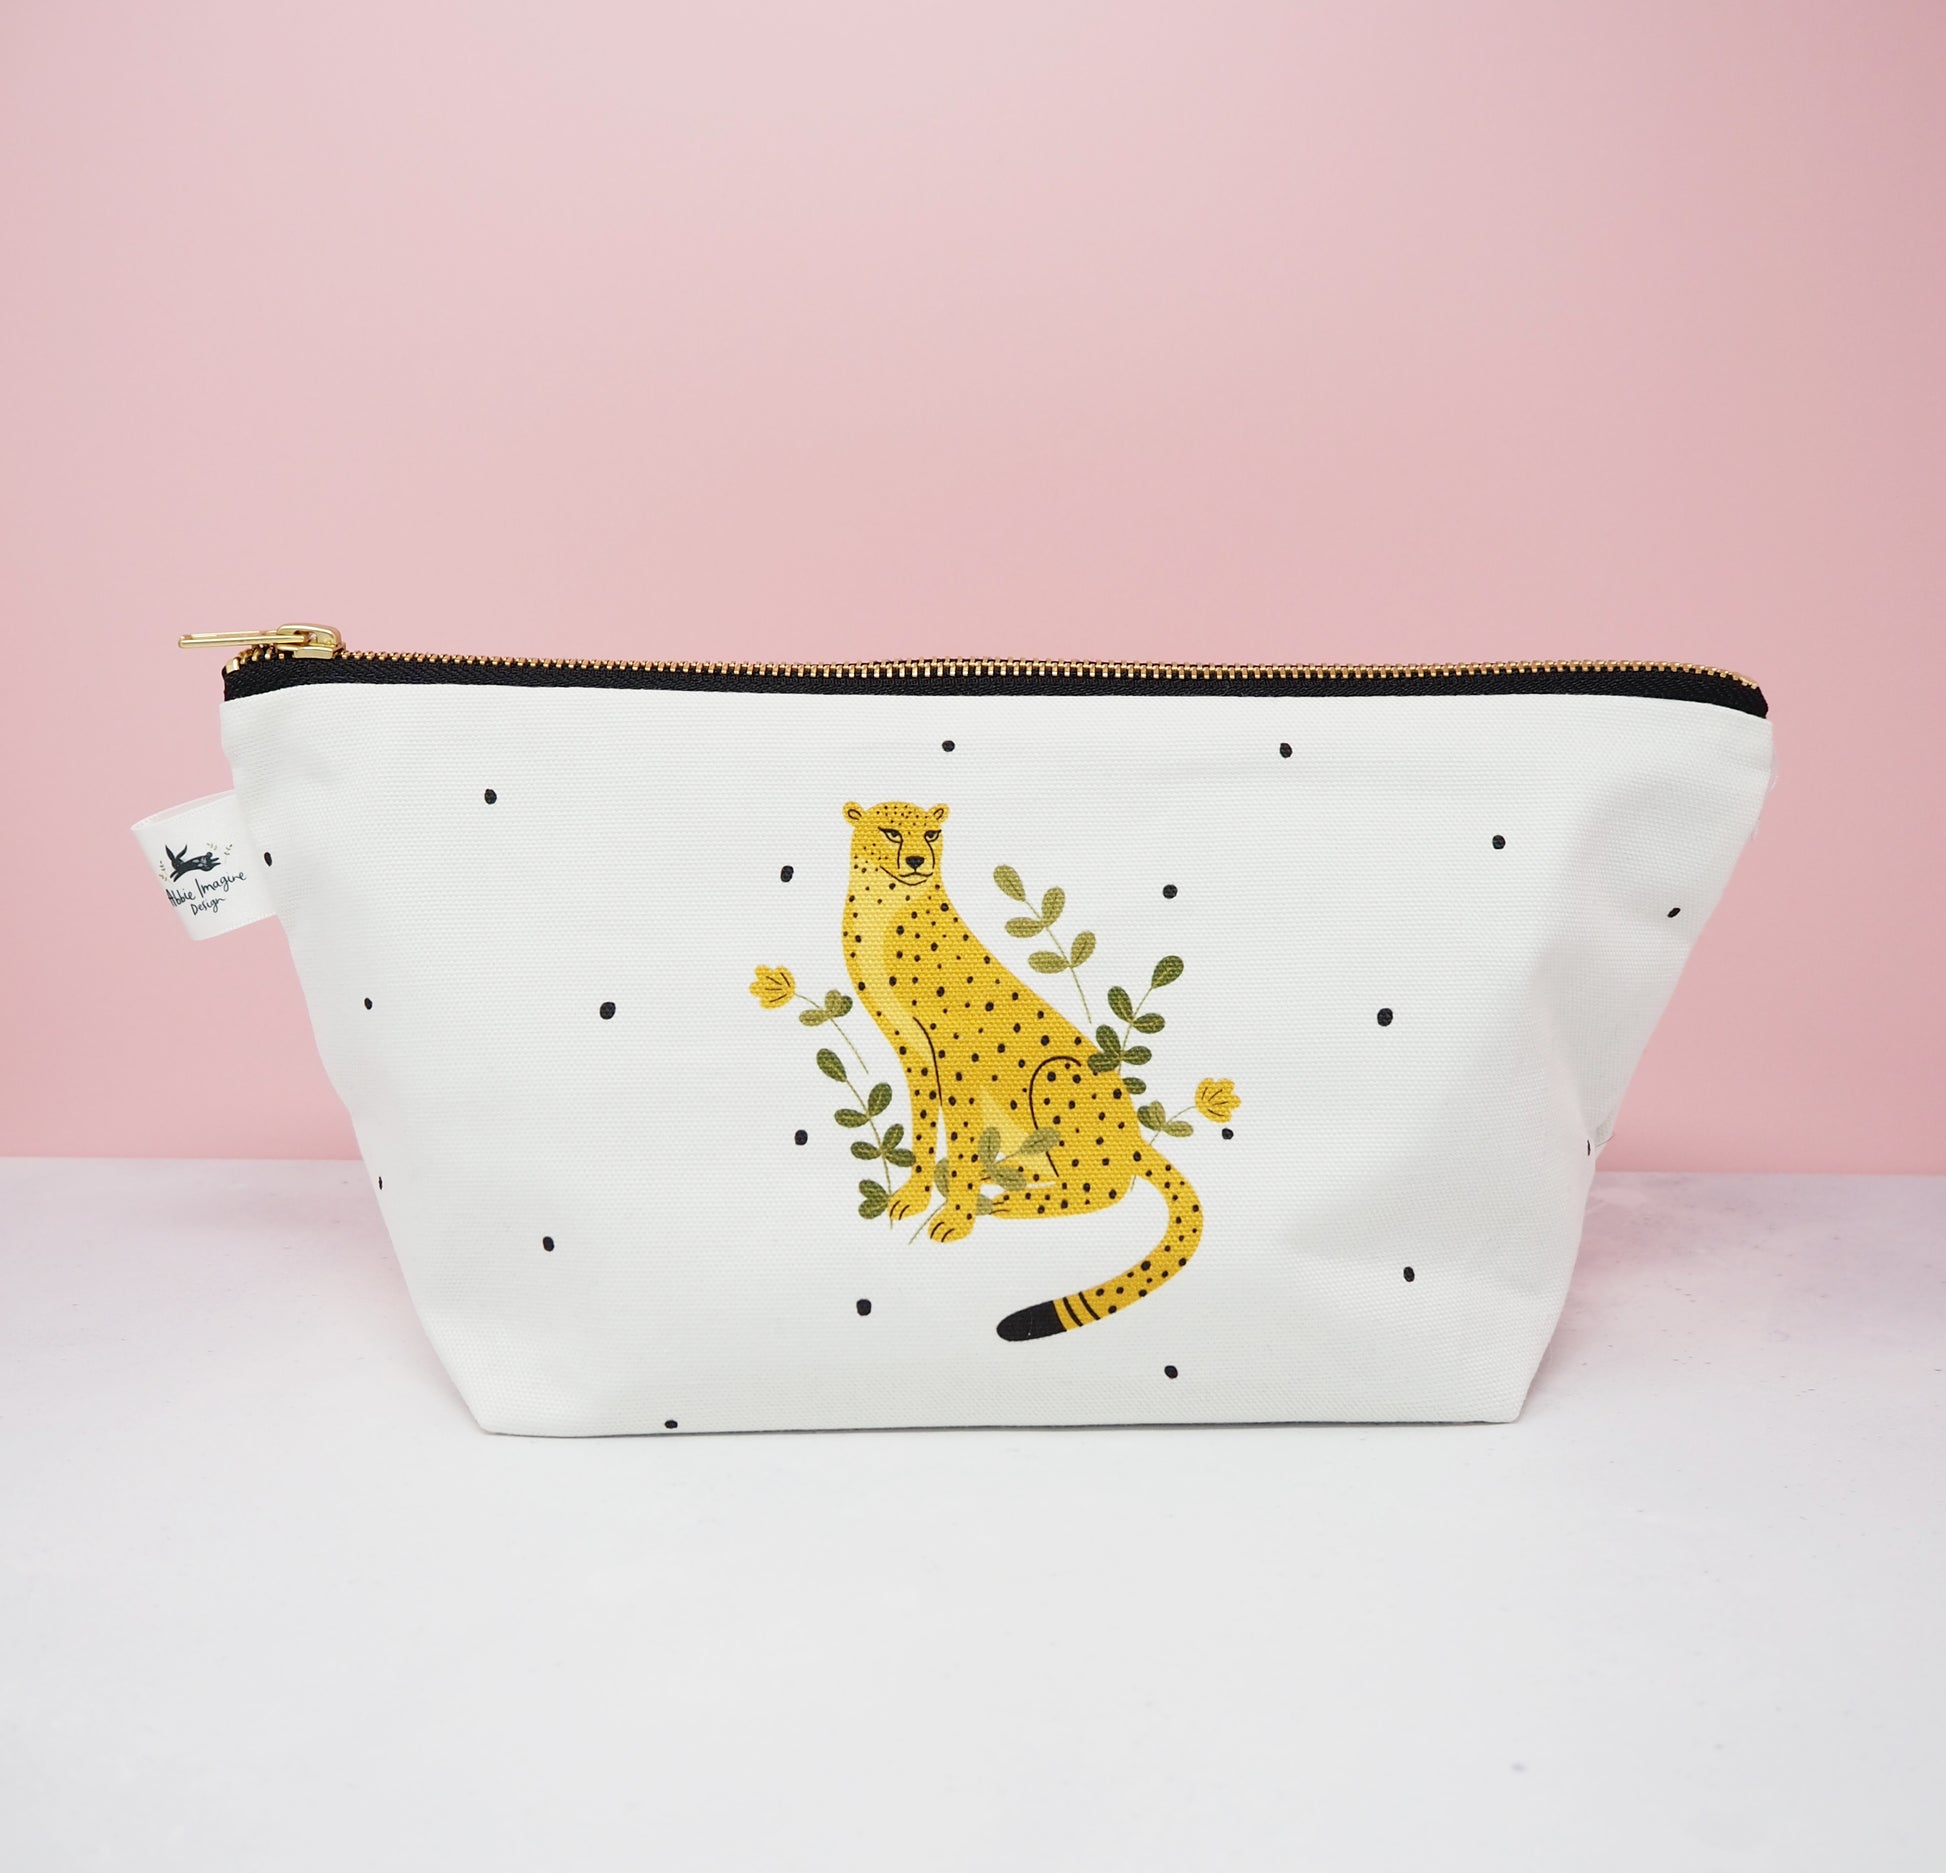 Cheetah polka dot cosmetic bag by Abbie Imagine